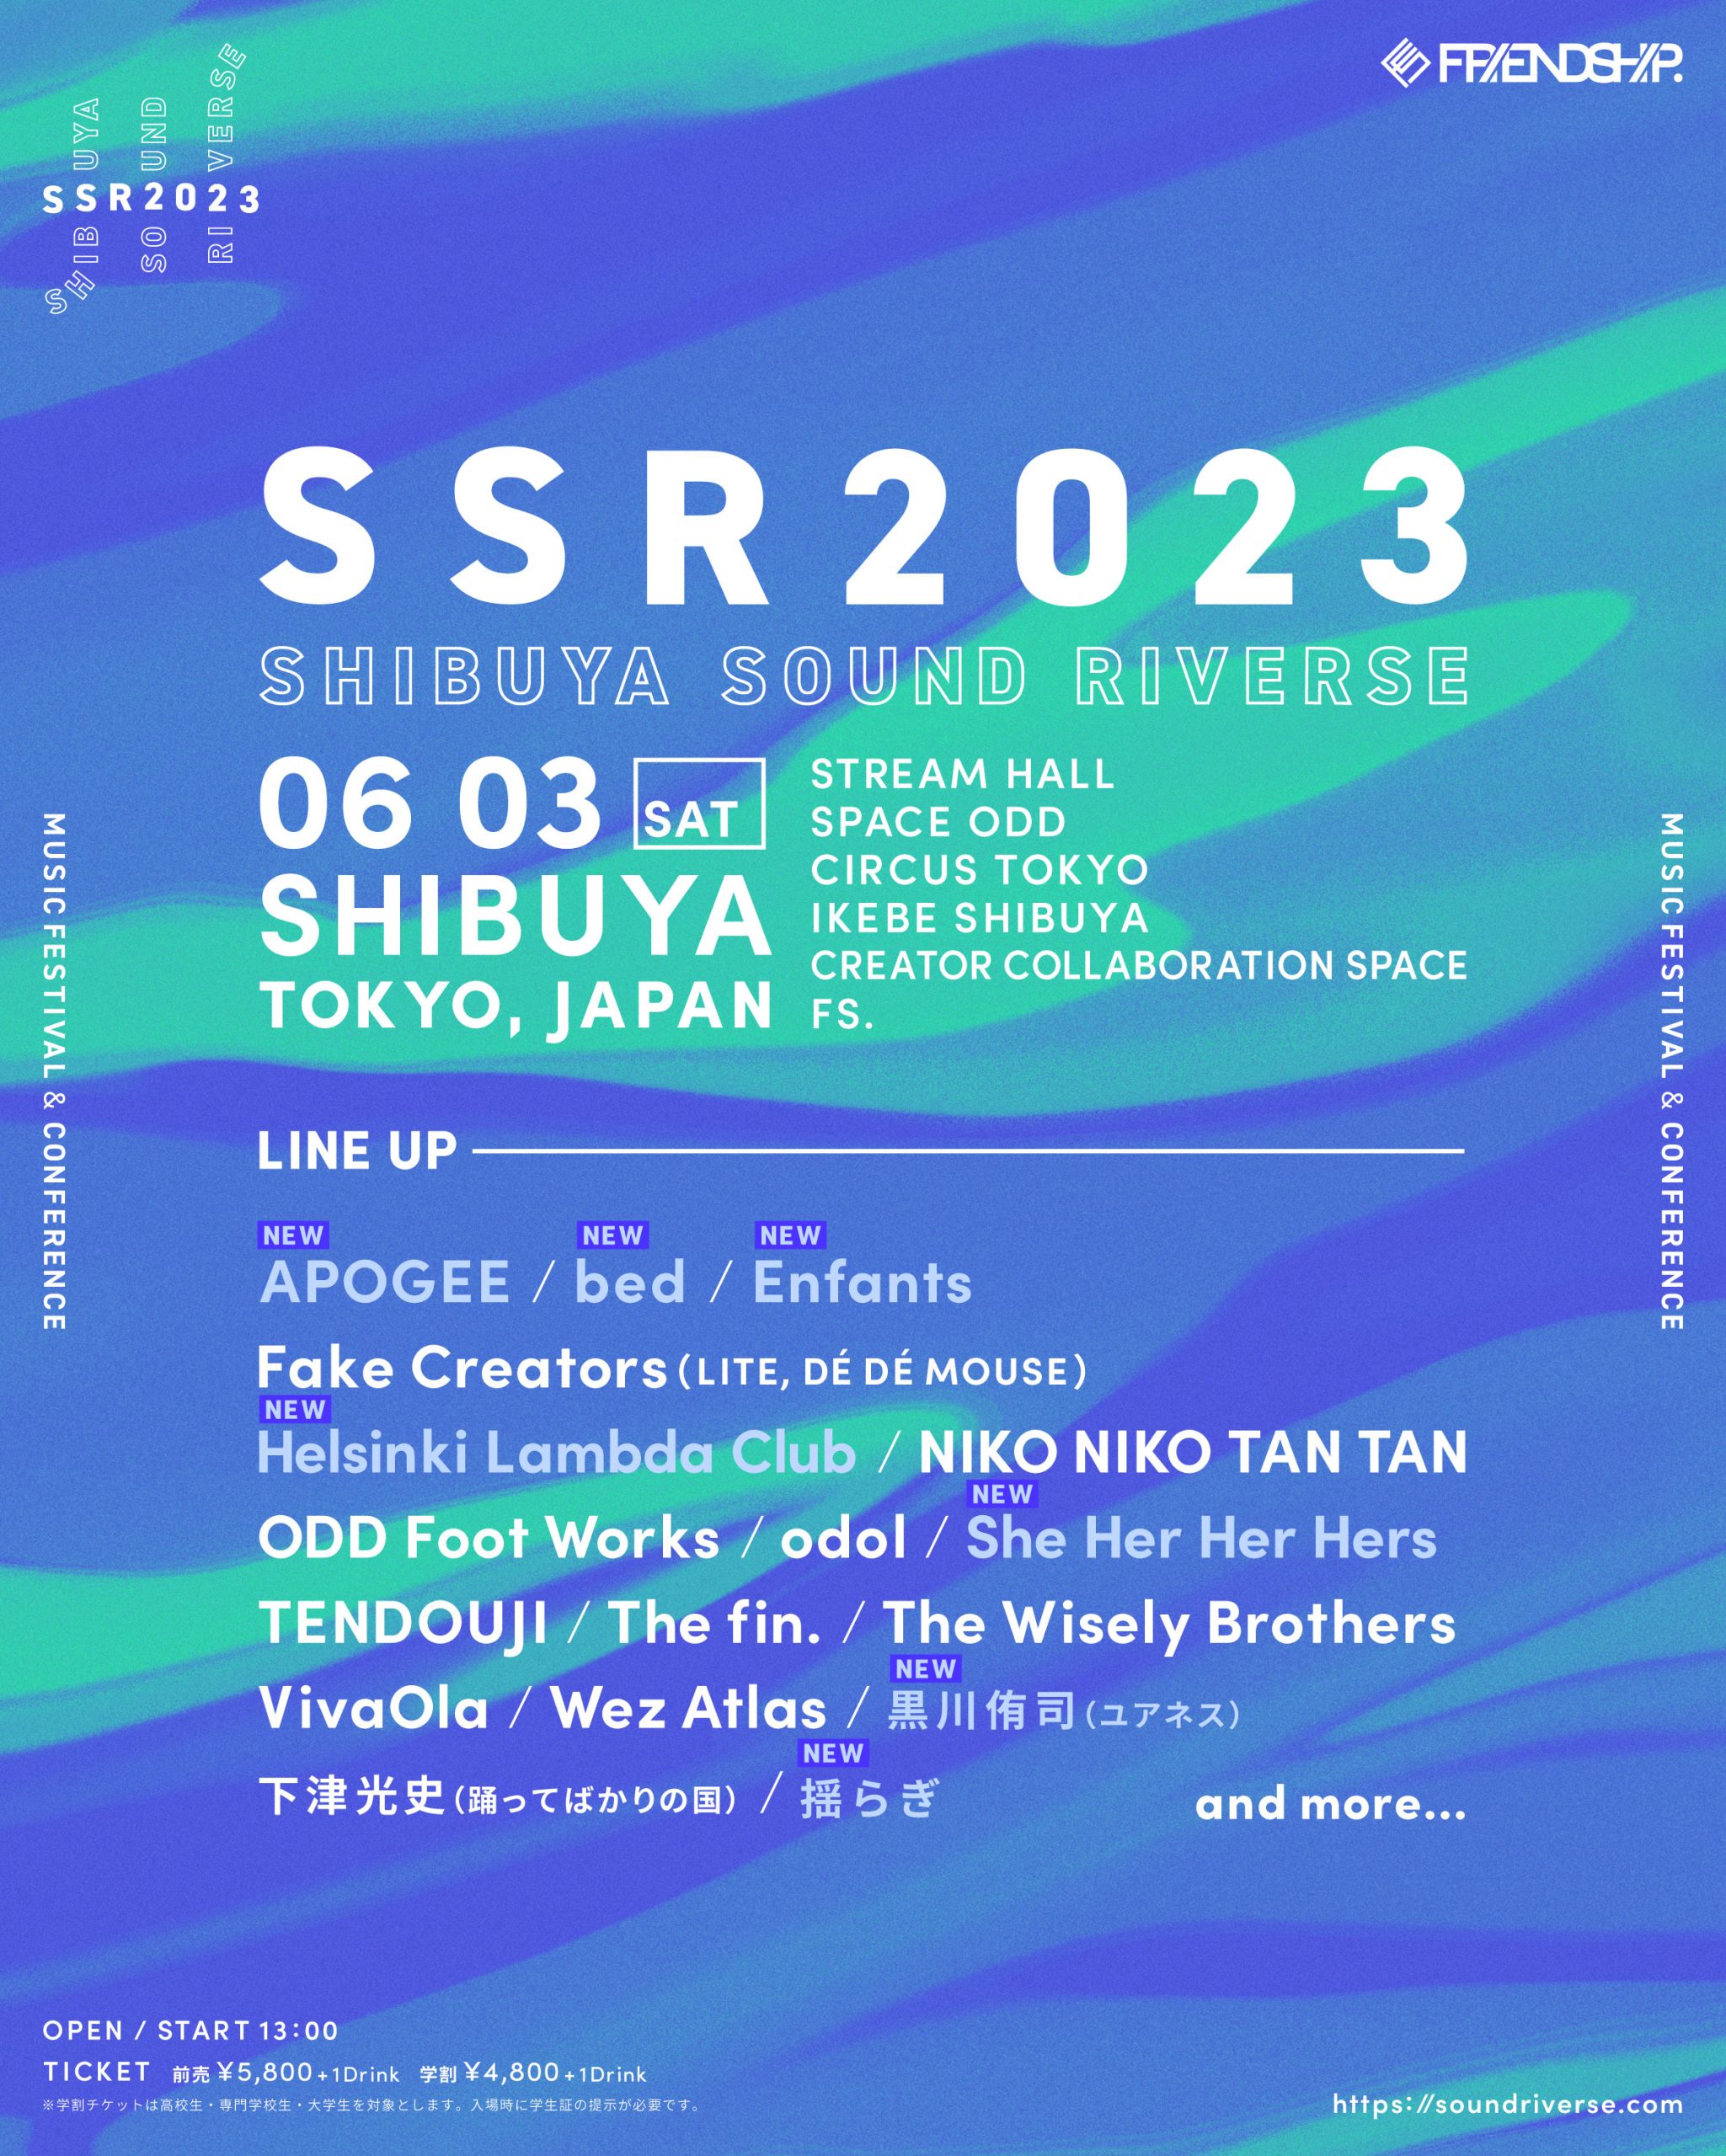 「SHIBUYA SOUND RIVERSE 2023」出演決定！2023年6月3日(土) @ 渋谷STREAM HALL / SPACE ODD / CIRCUS TOKYOなど OPEN / START 13:00